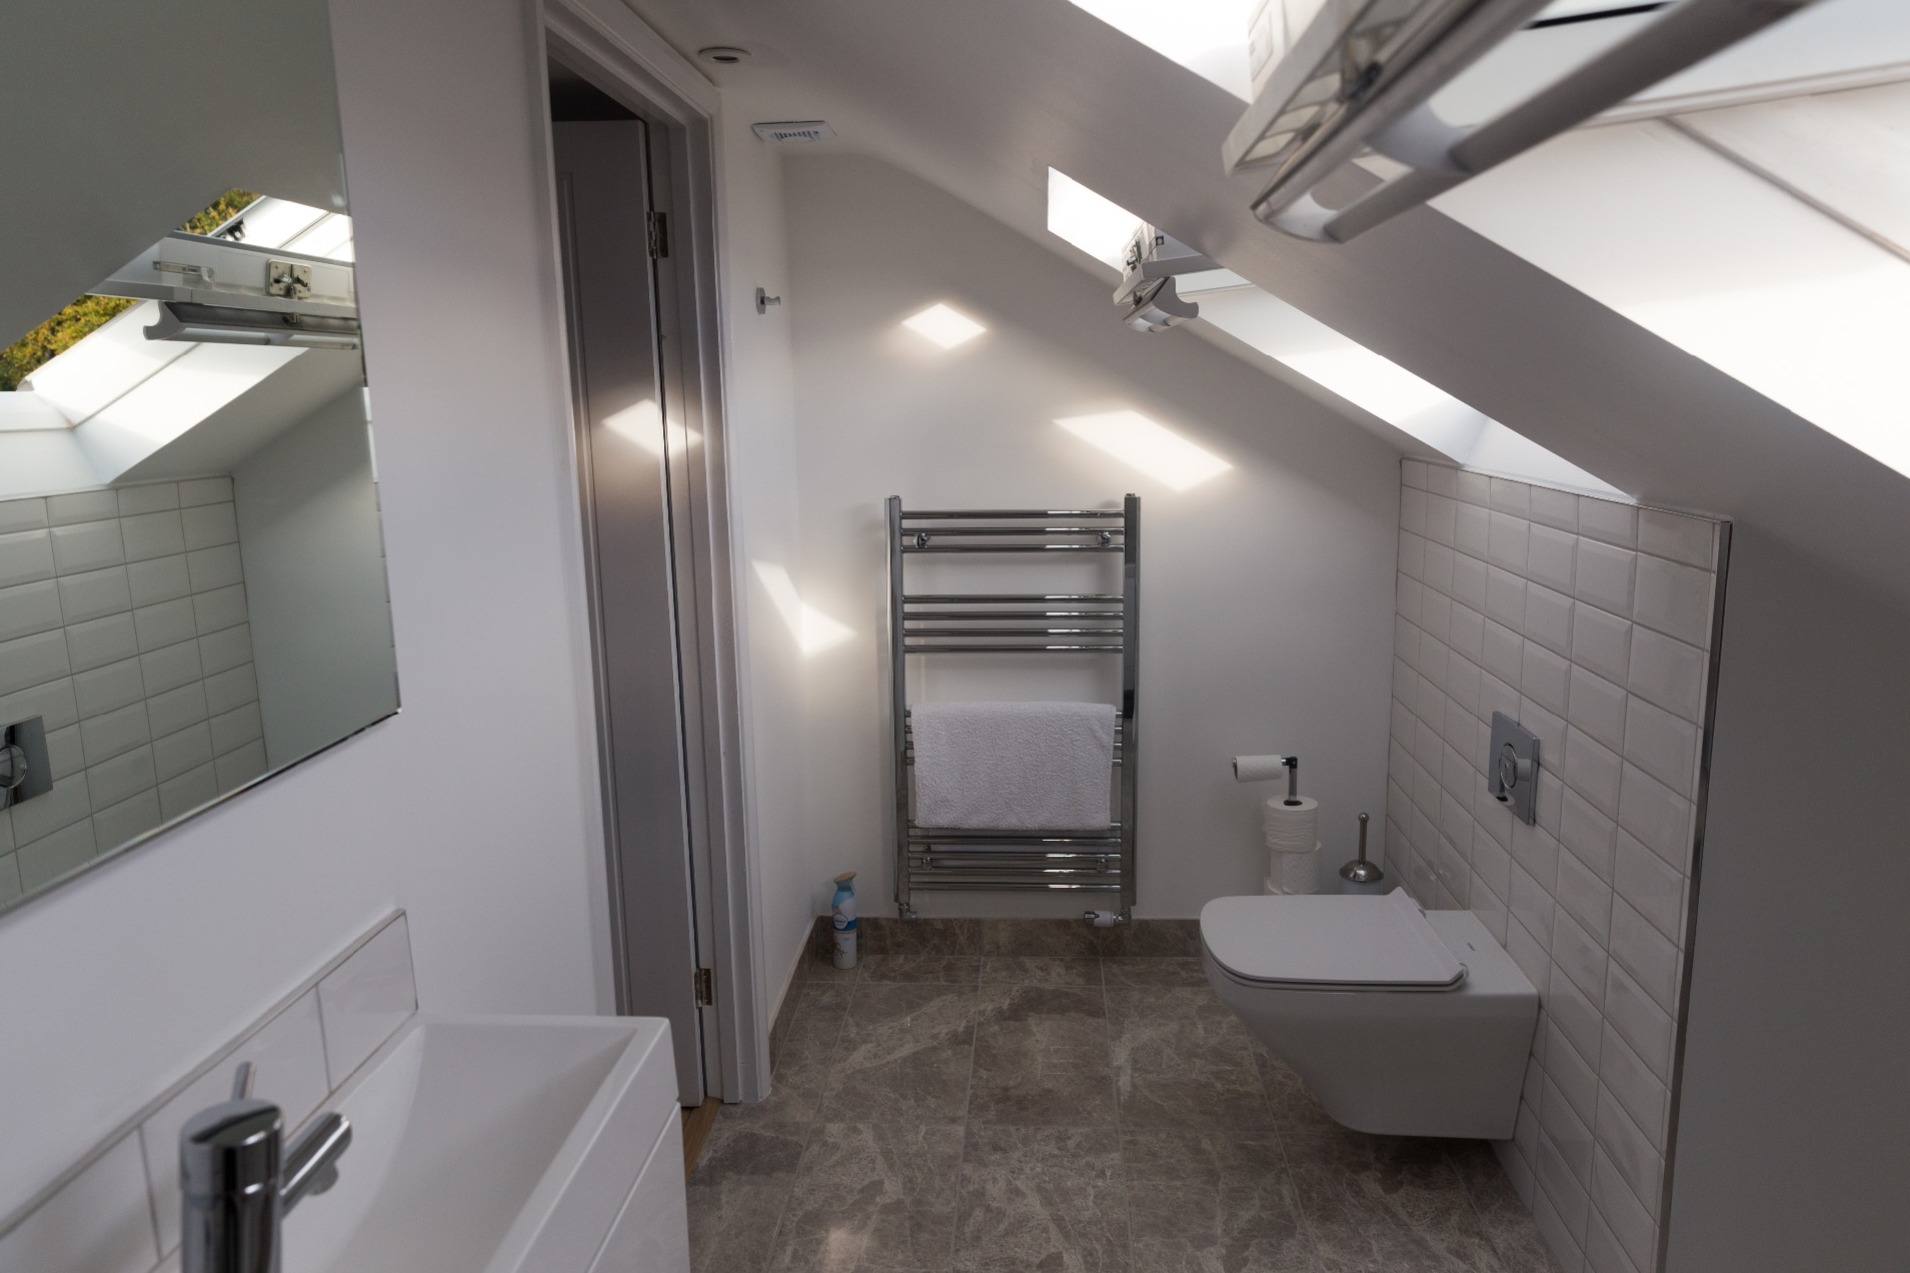 Dormer loft conversion bathroom, Maidenhead